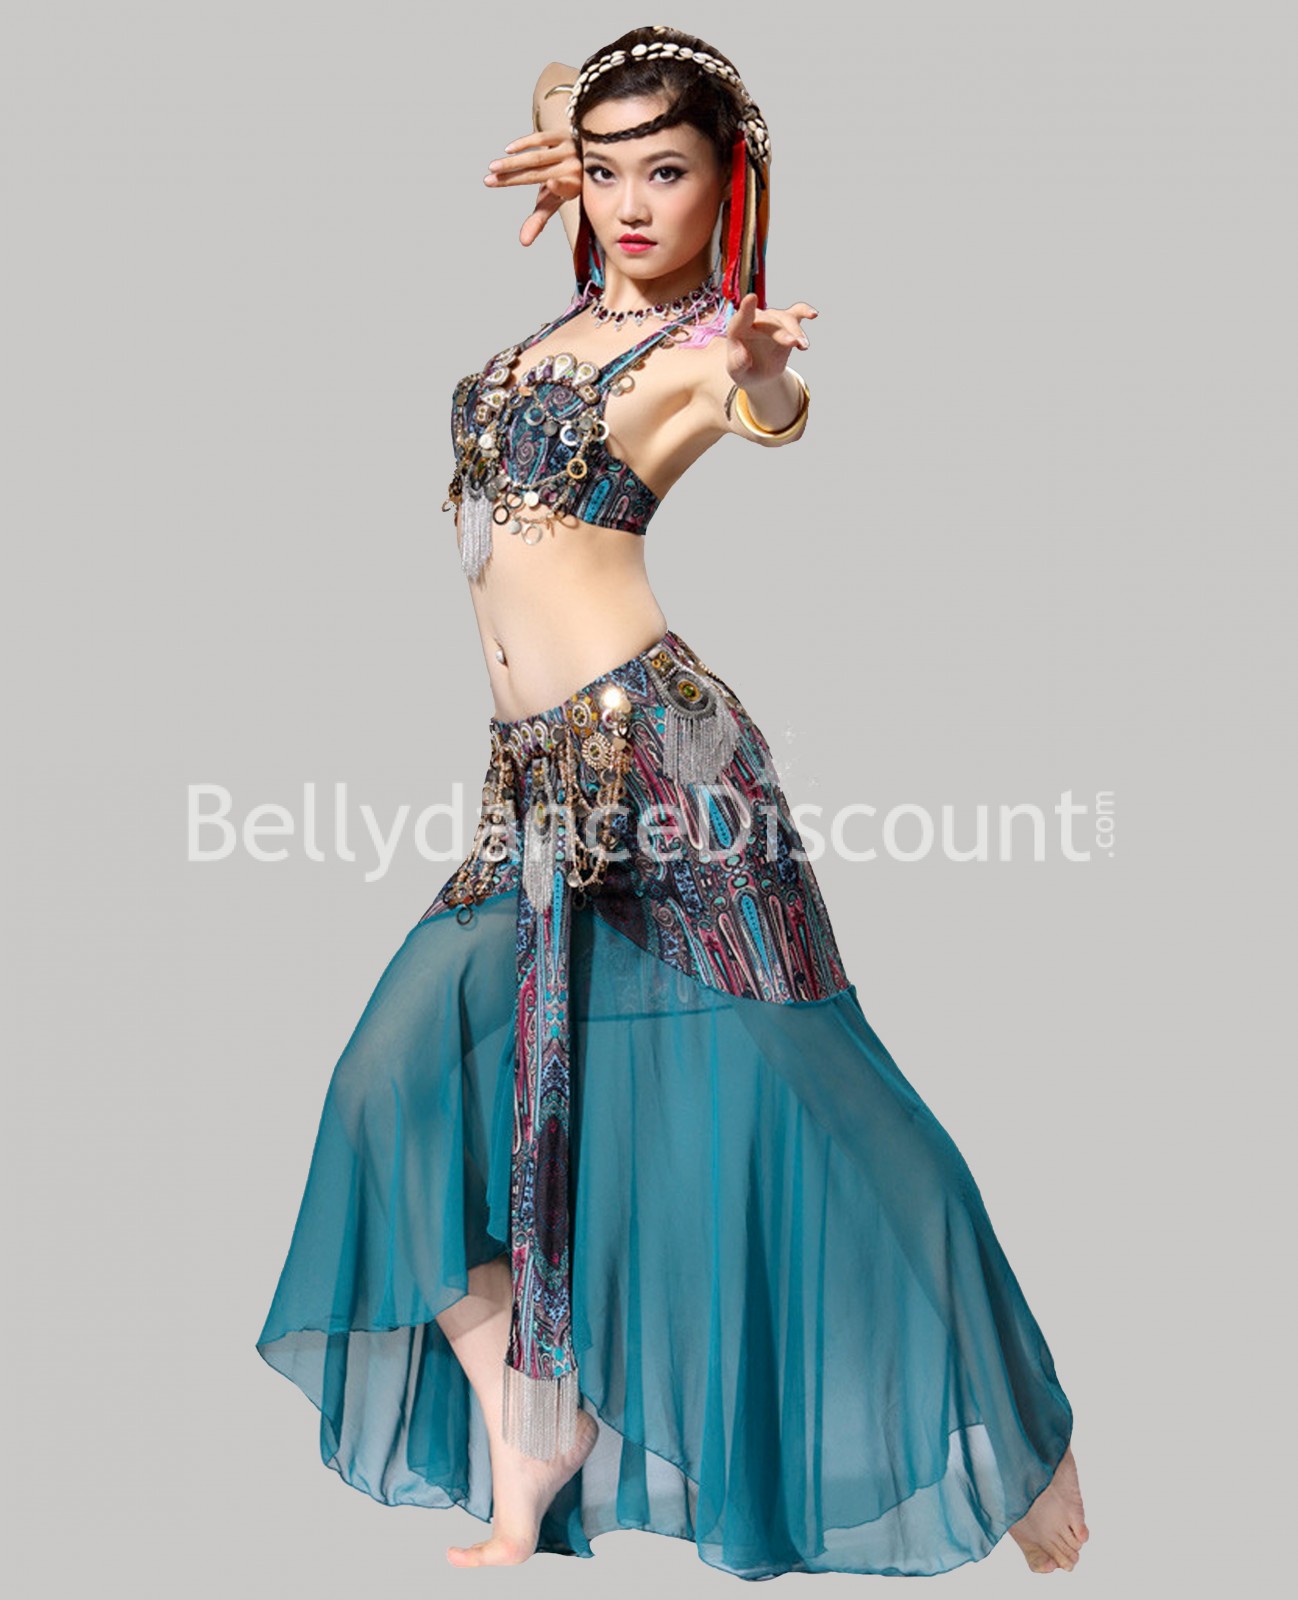 https://www.bellydancediscount.com/11380-thickbox_default/petrol-blue-tribal-fusion-bellydance-costume.jpg